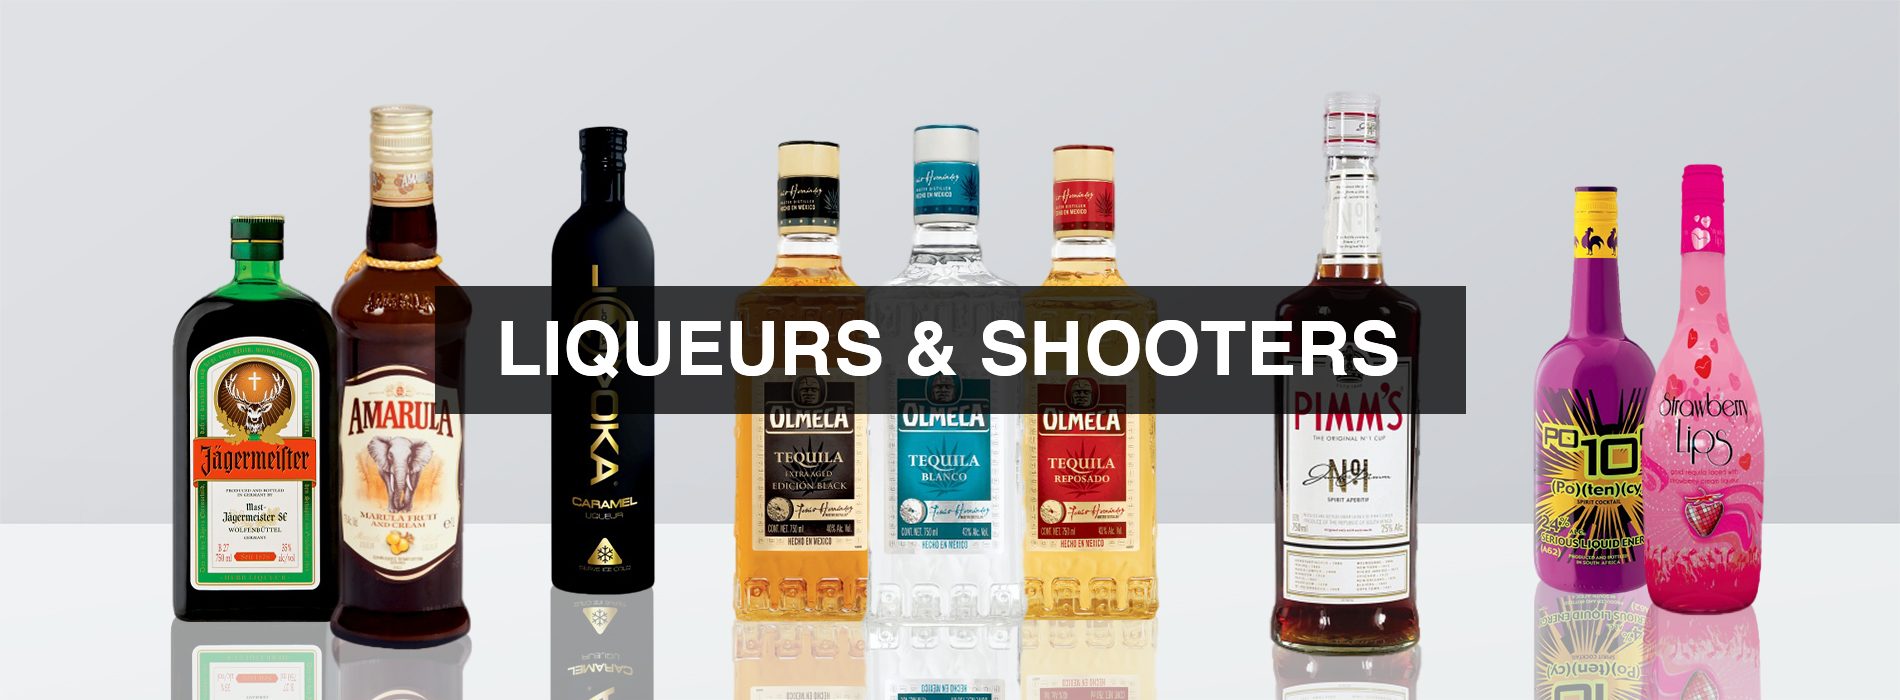 Liqueurs &Shooters